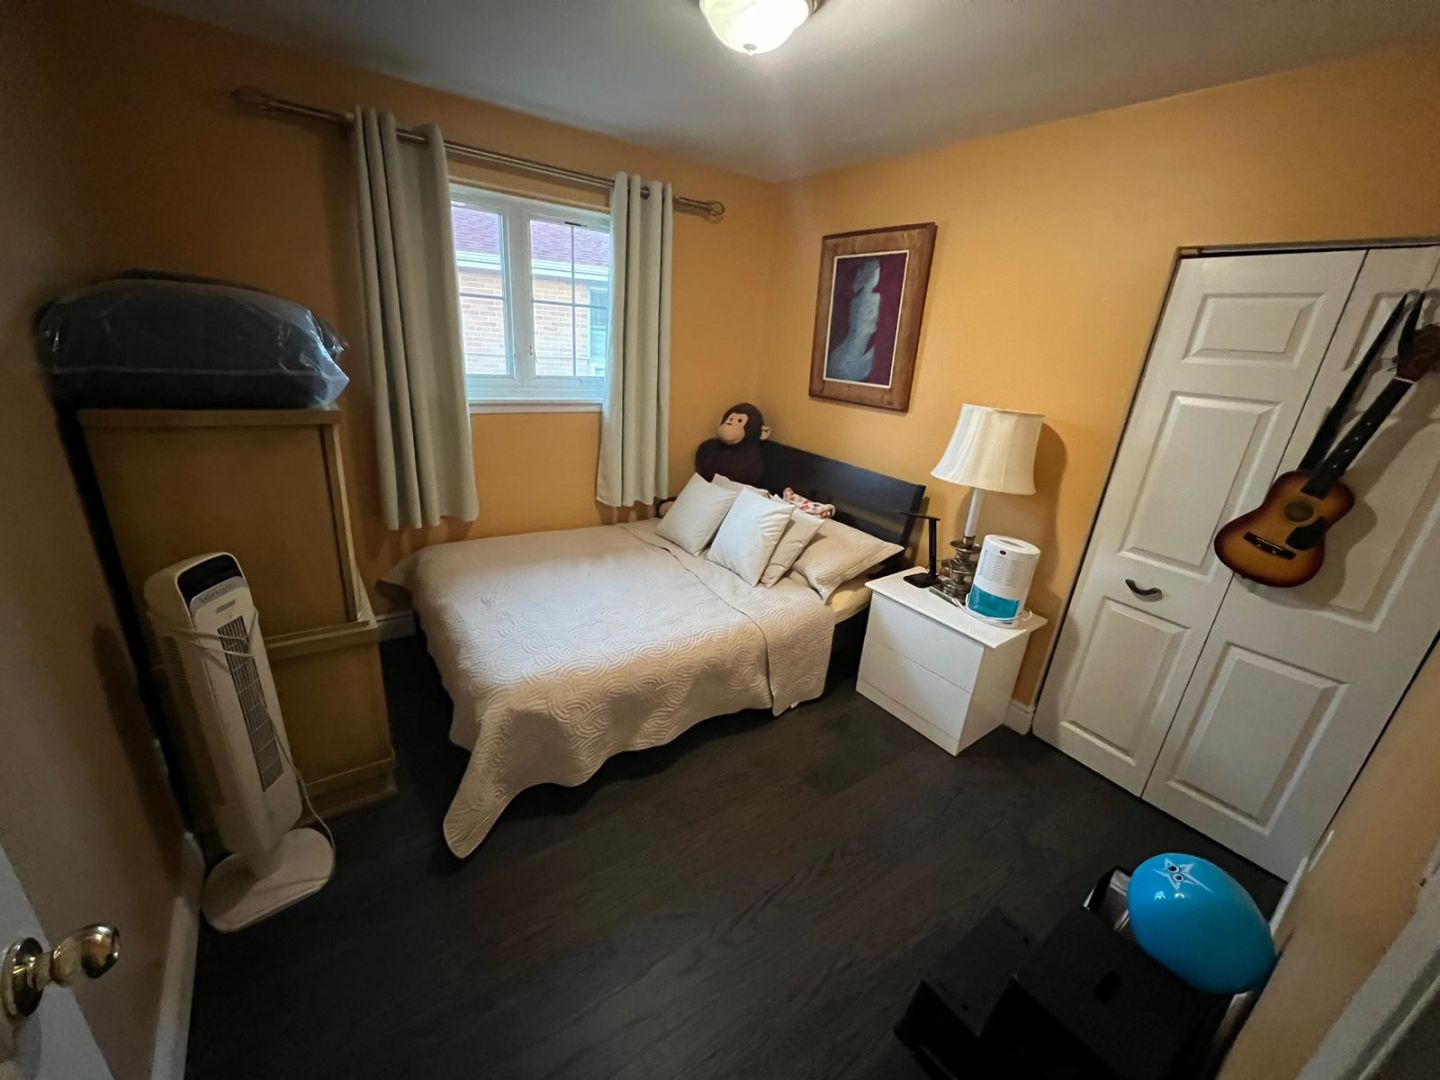 Elite Homestay Room - Laskay Cres, Toronto room for rent 29